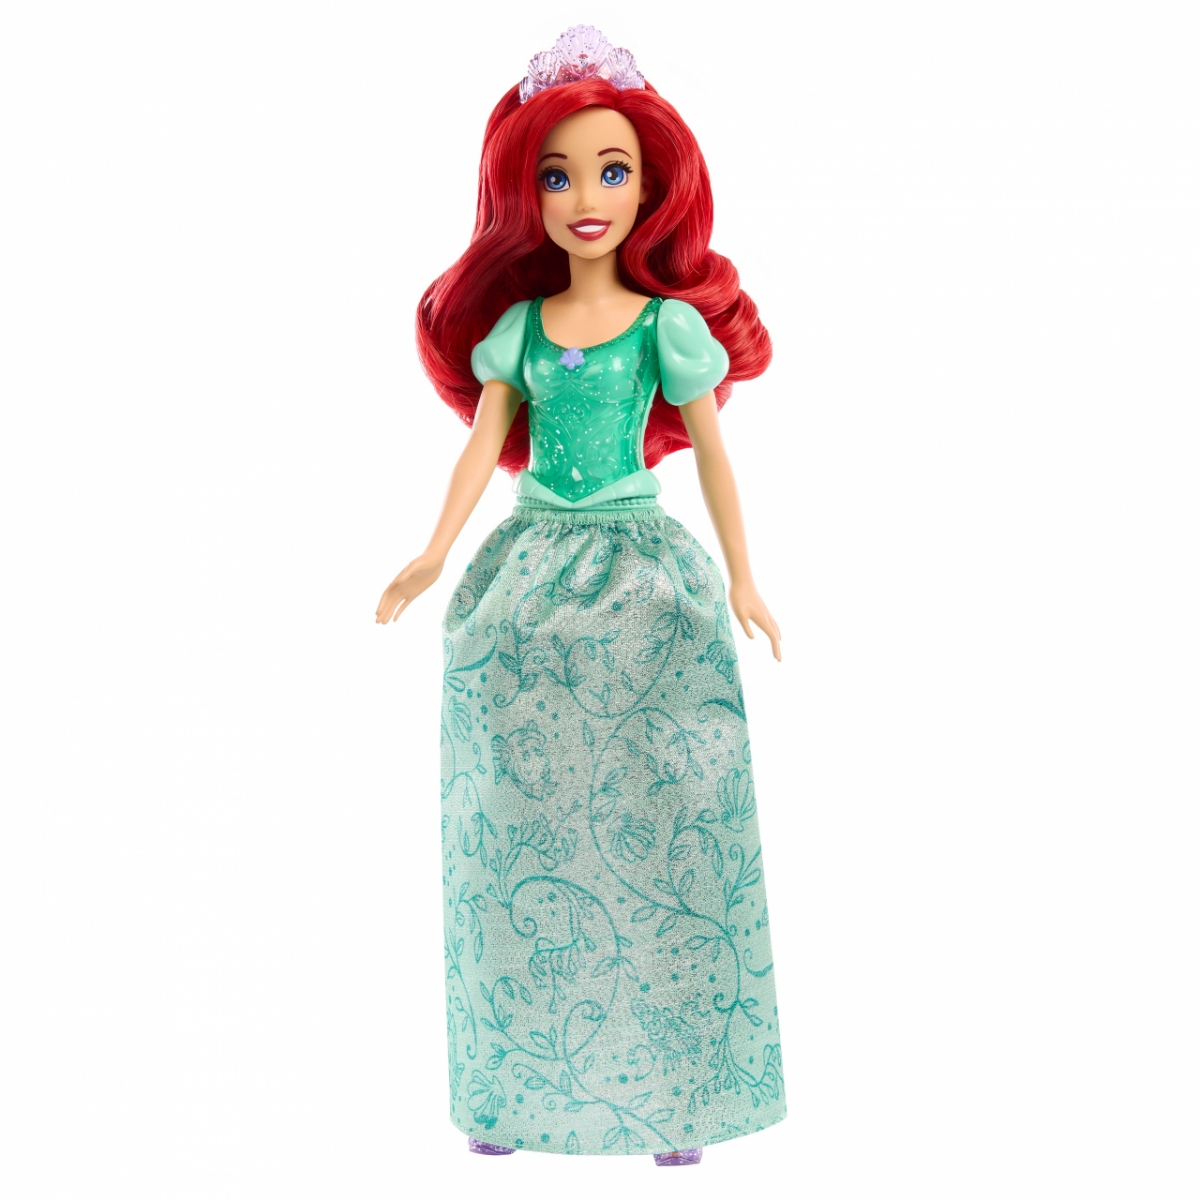 Disney Princess Fashion Core Doll Asst. Ariel Lelle HLW10